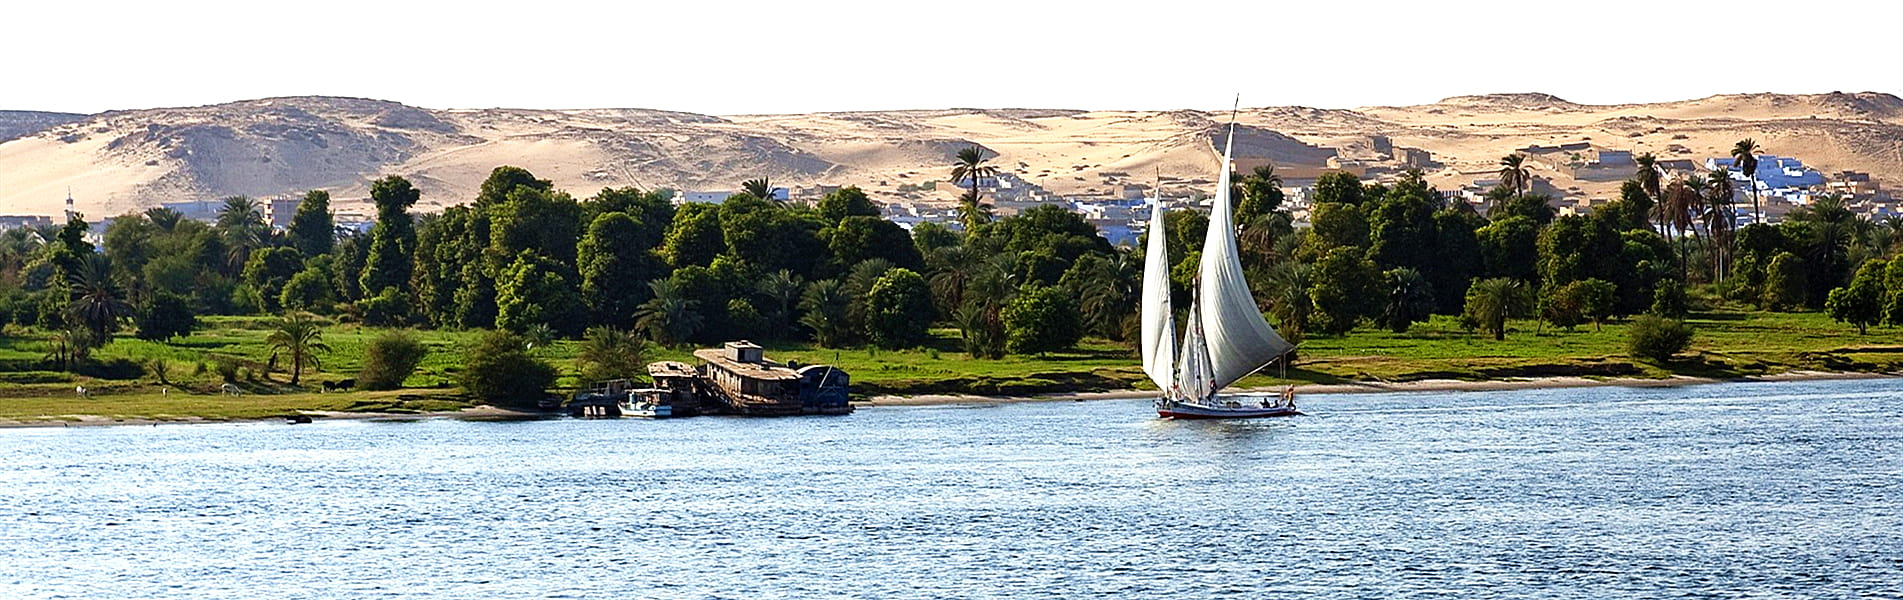 Nile River of Egypt